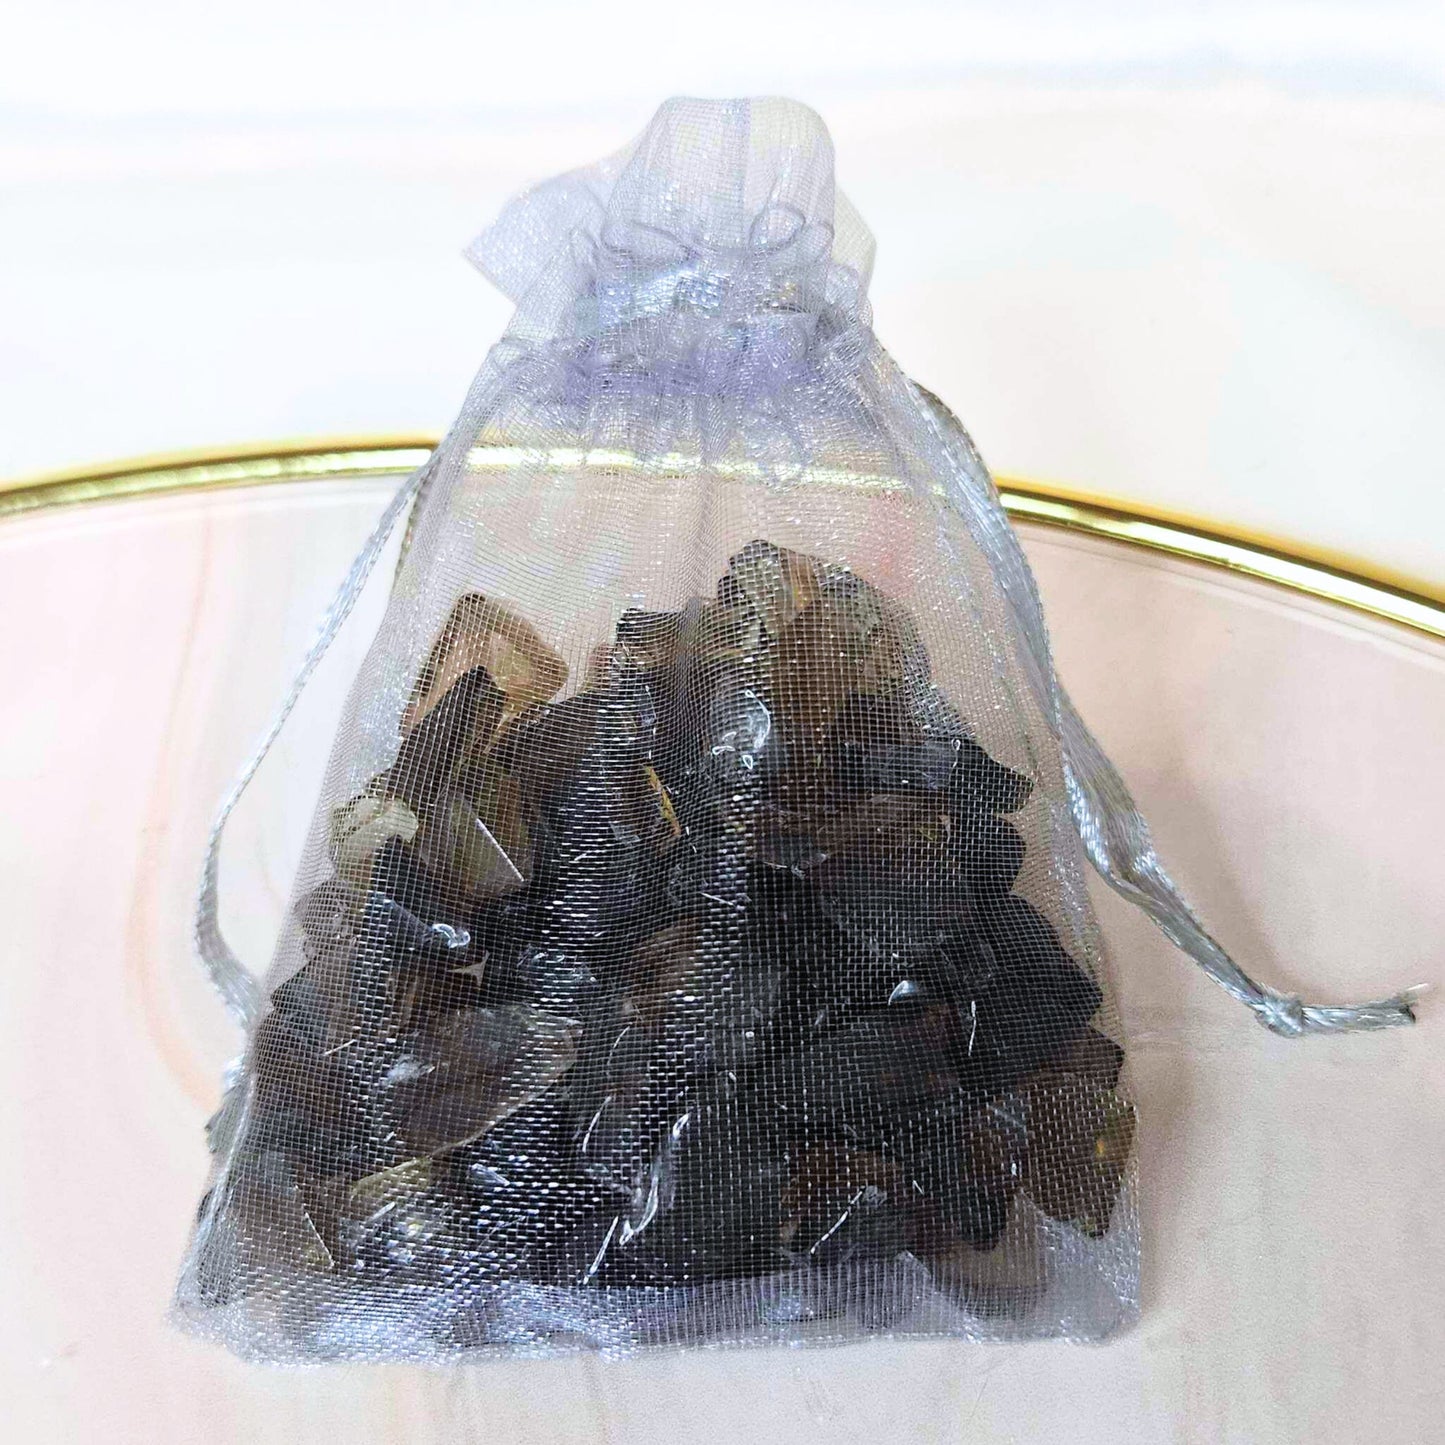 50g Smoky Quartz Crystal Chips - In Medium Organza Bag